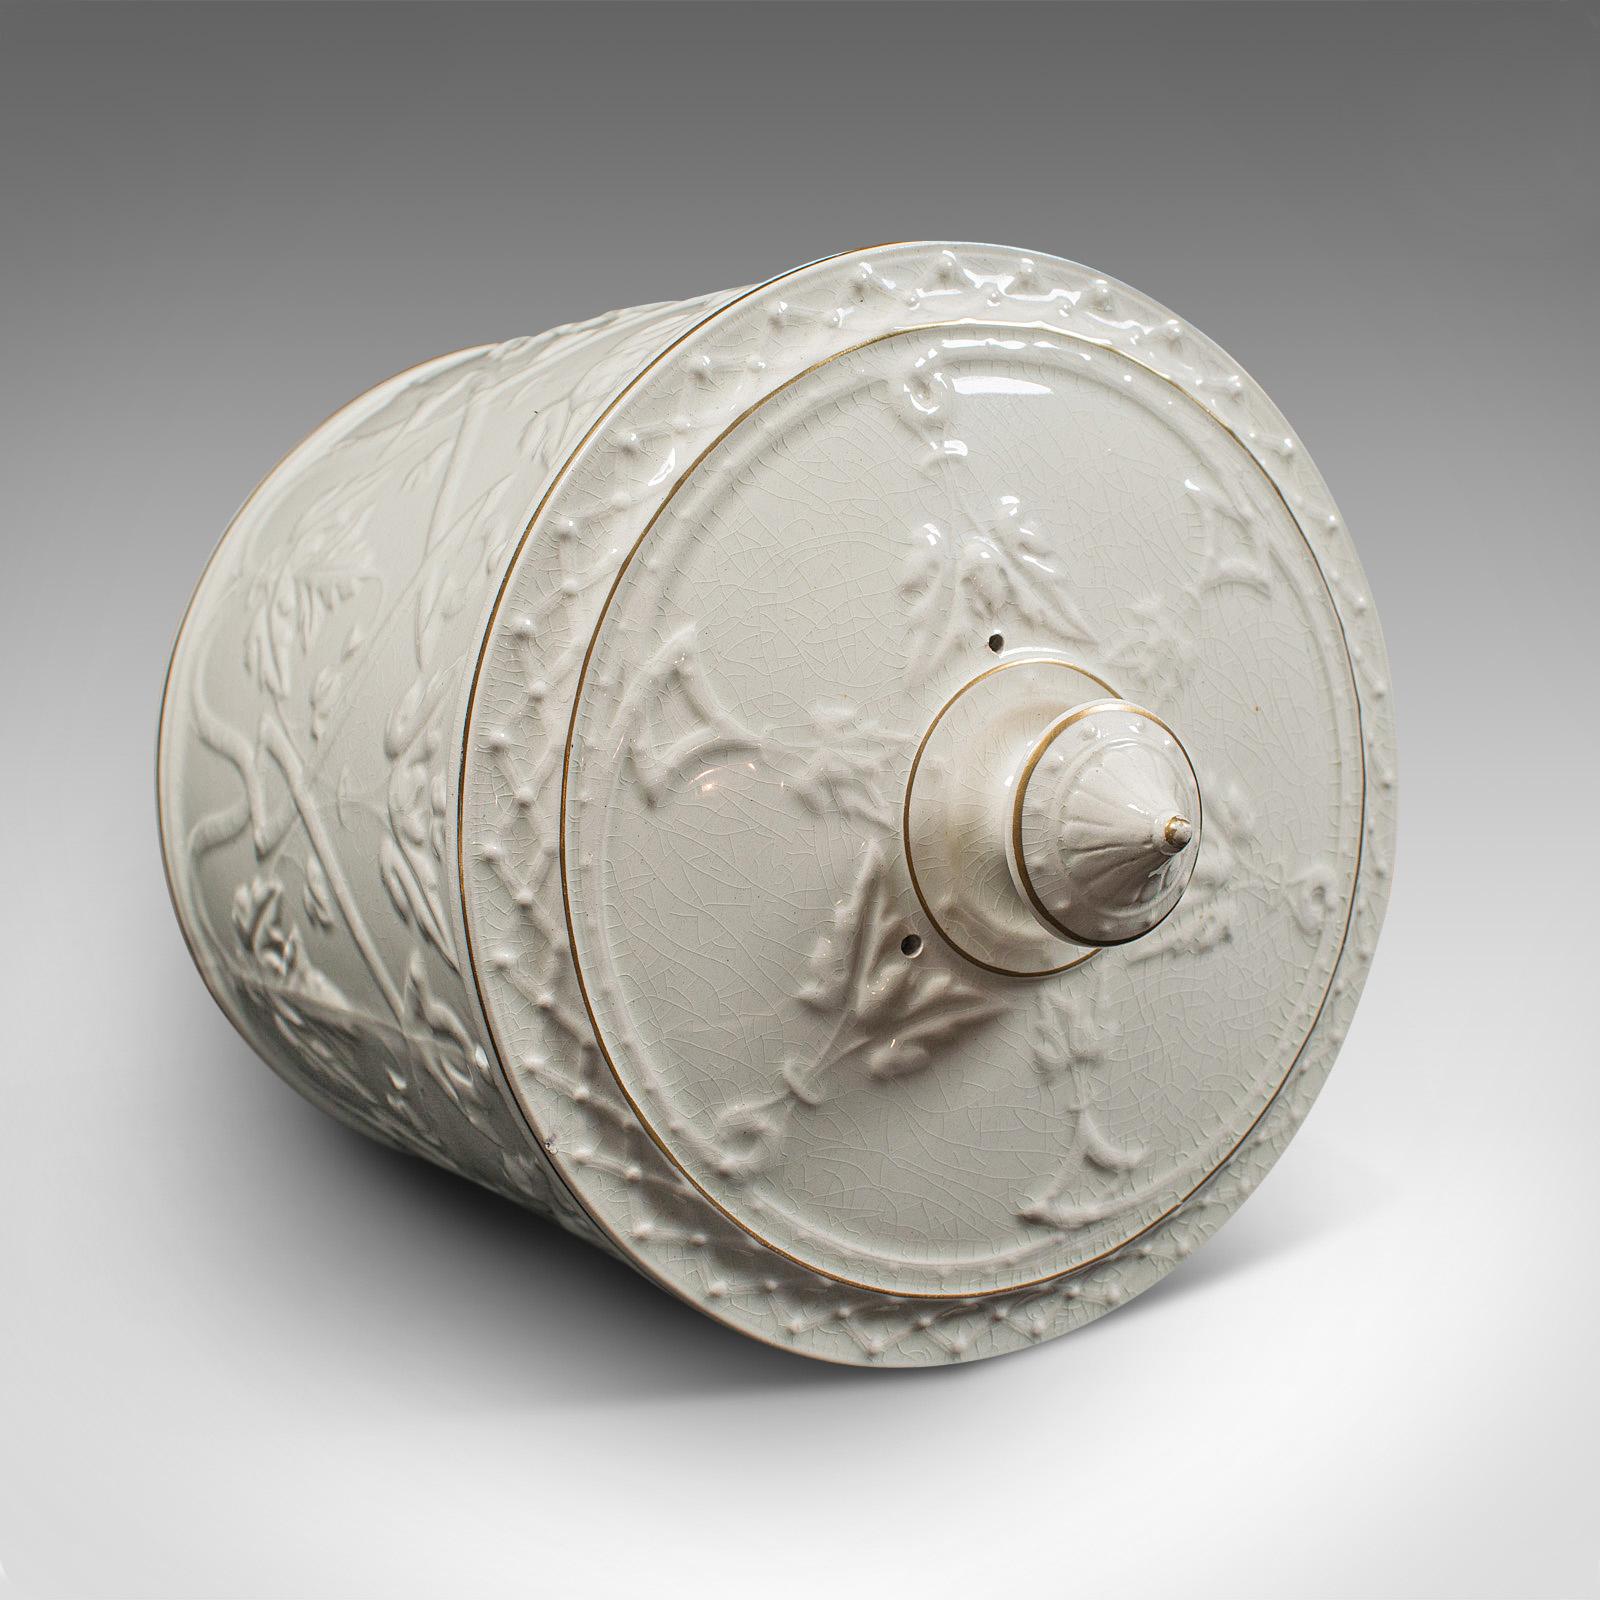 British Antique Stilton Dome, English, Ceramic, Cheese Keeper, Cracker Plate, Victorian